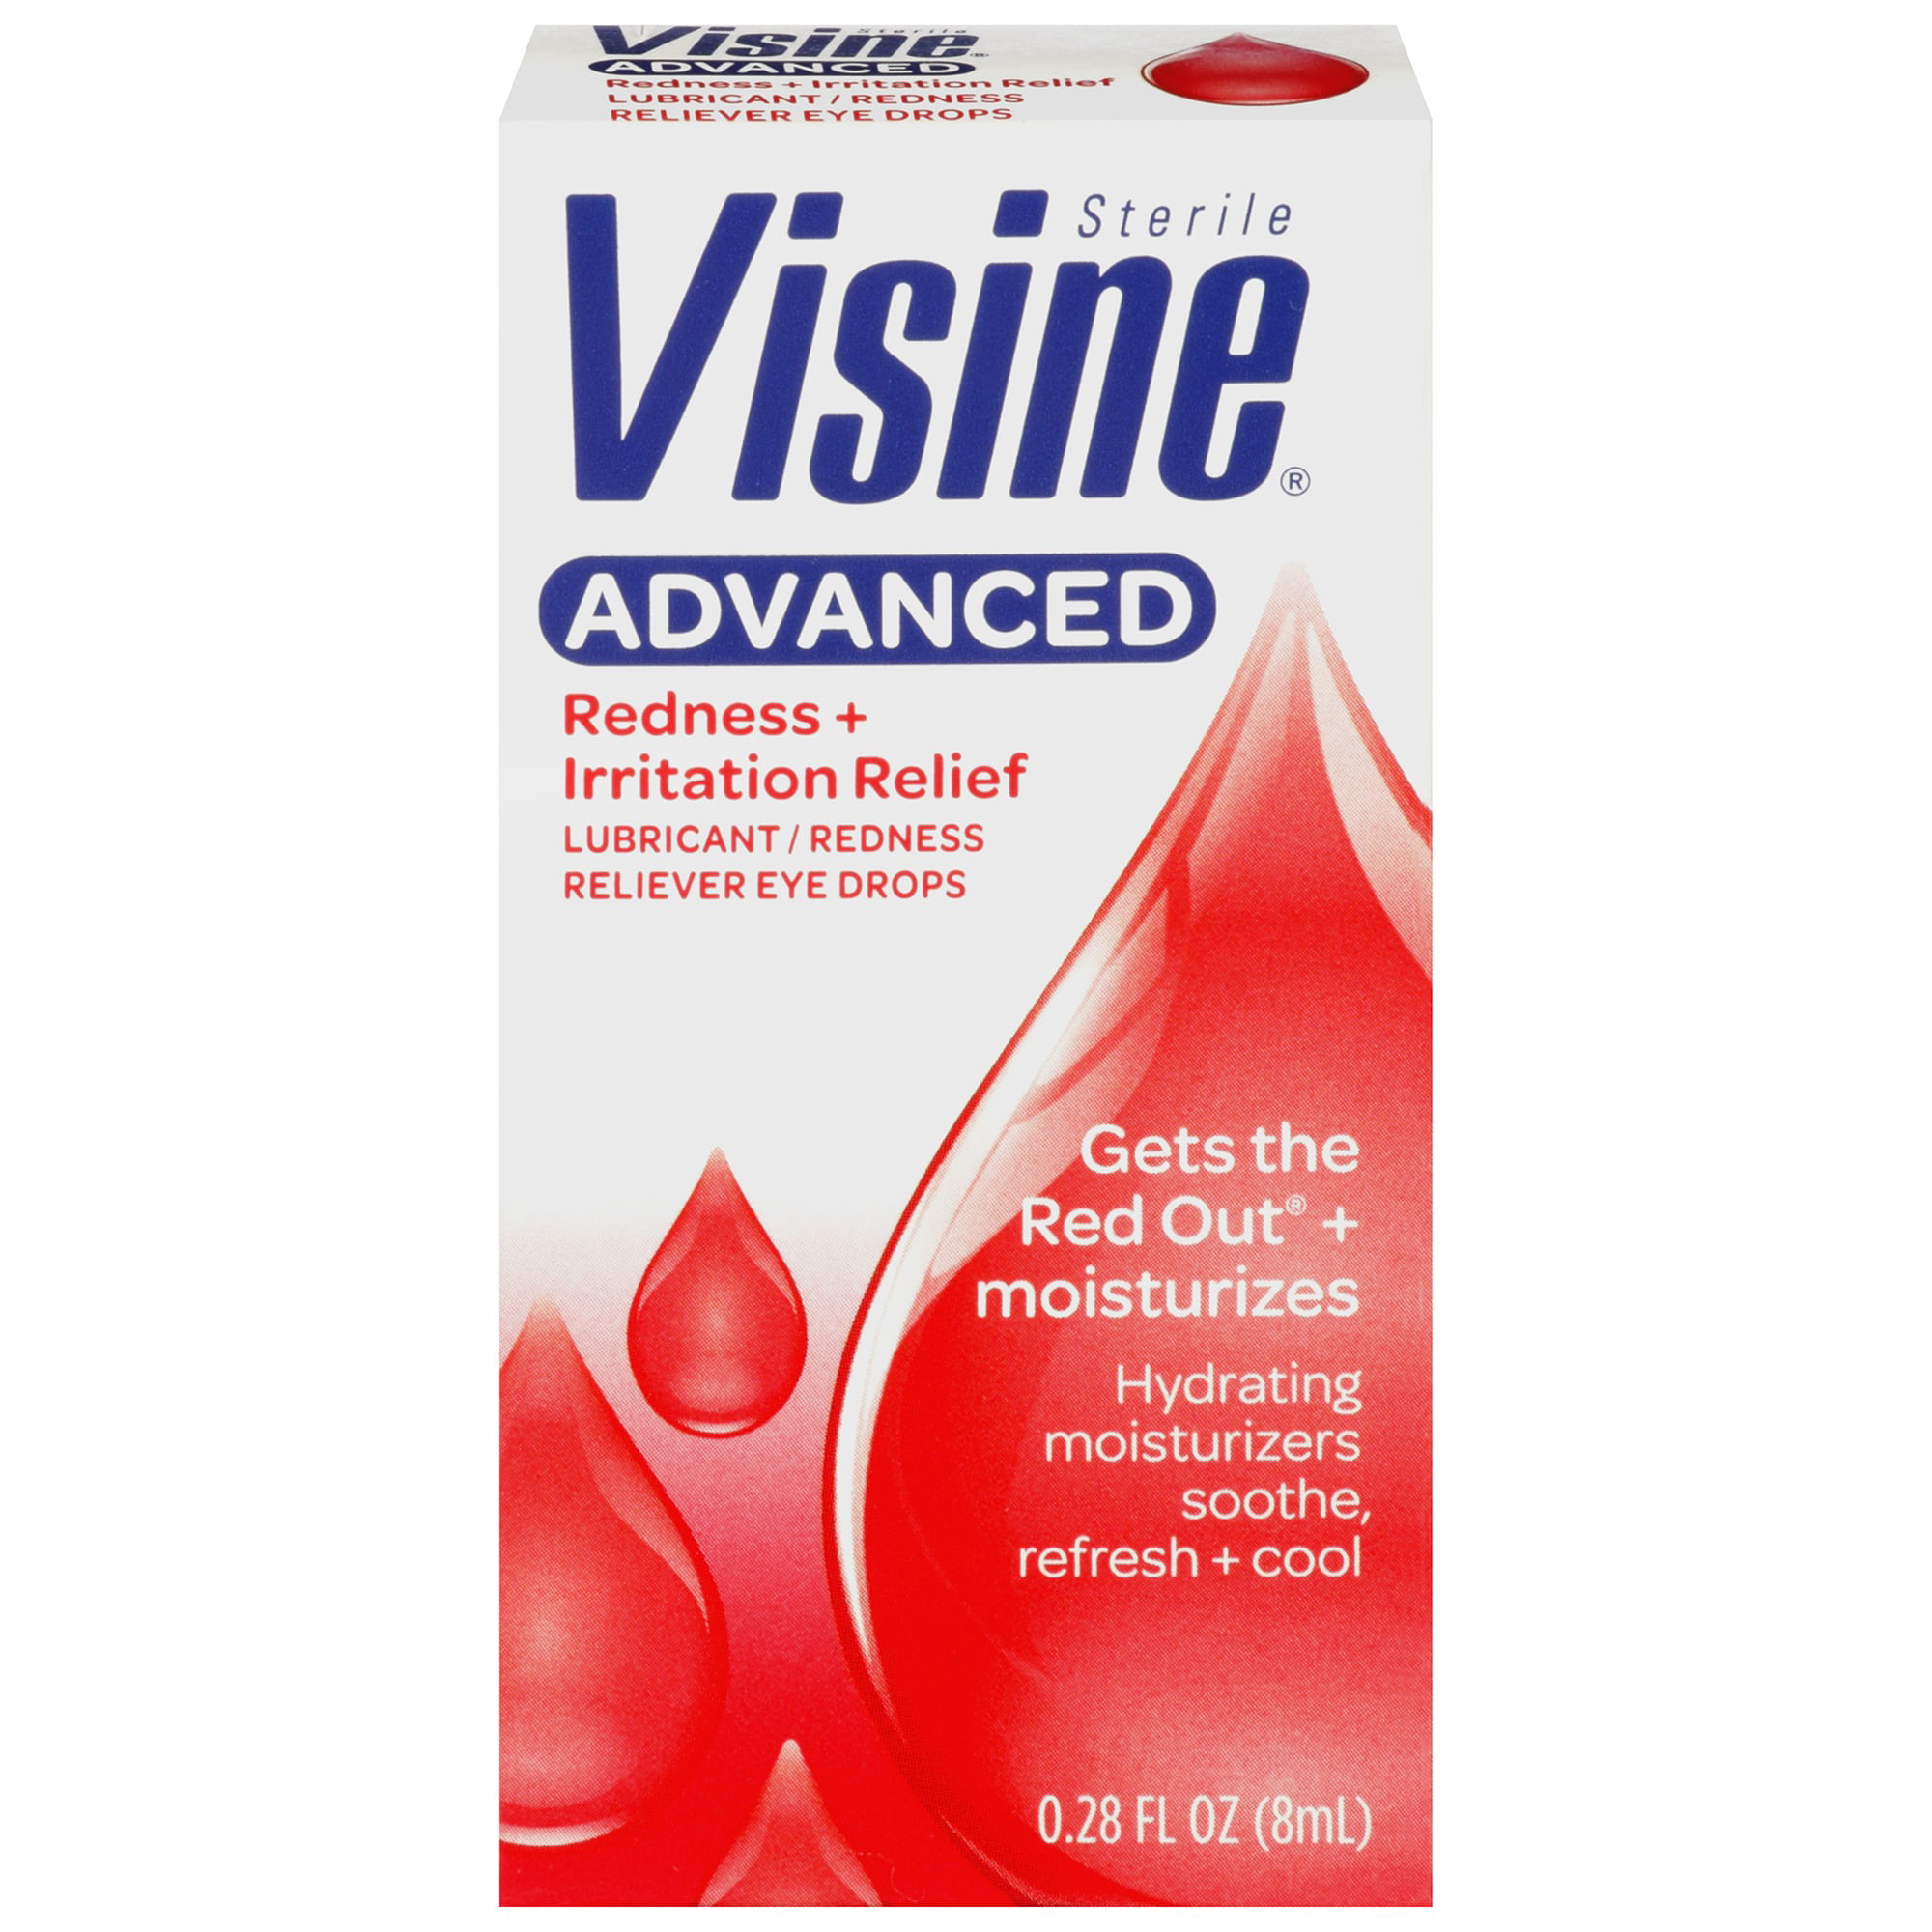 Visine Advanced Relief Lubricant/Redness Reliever Eye